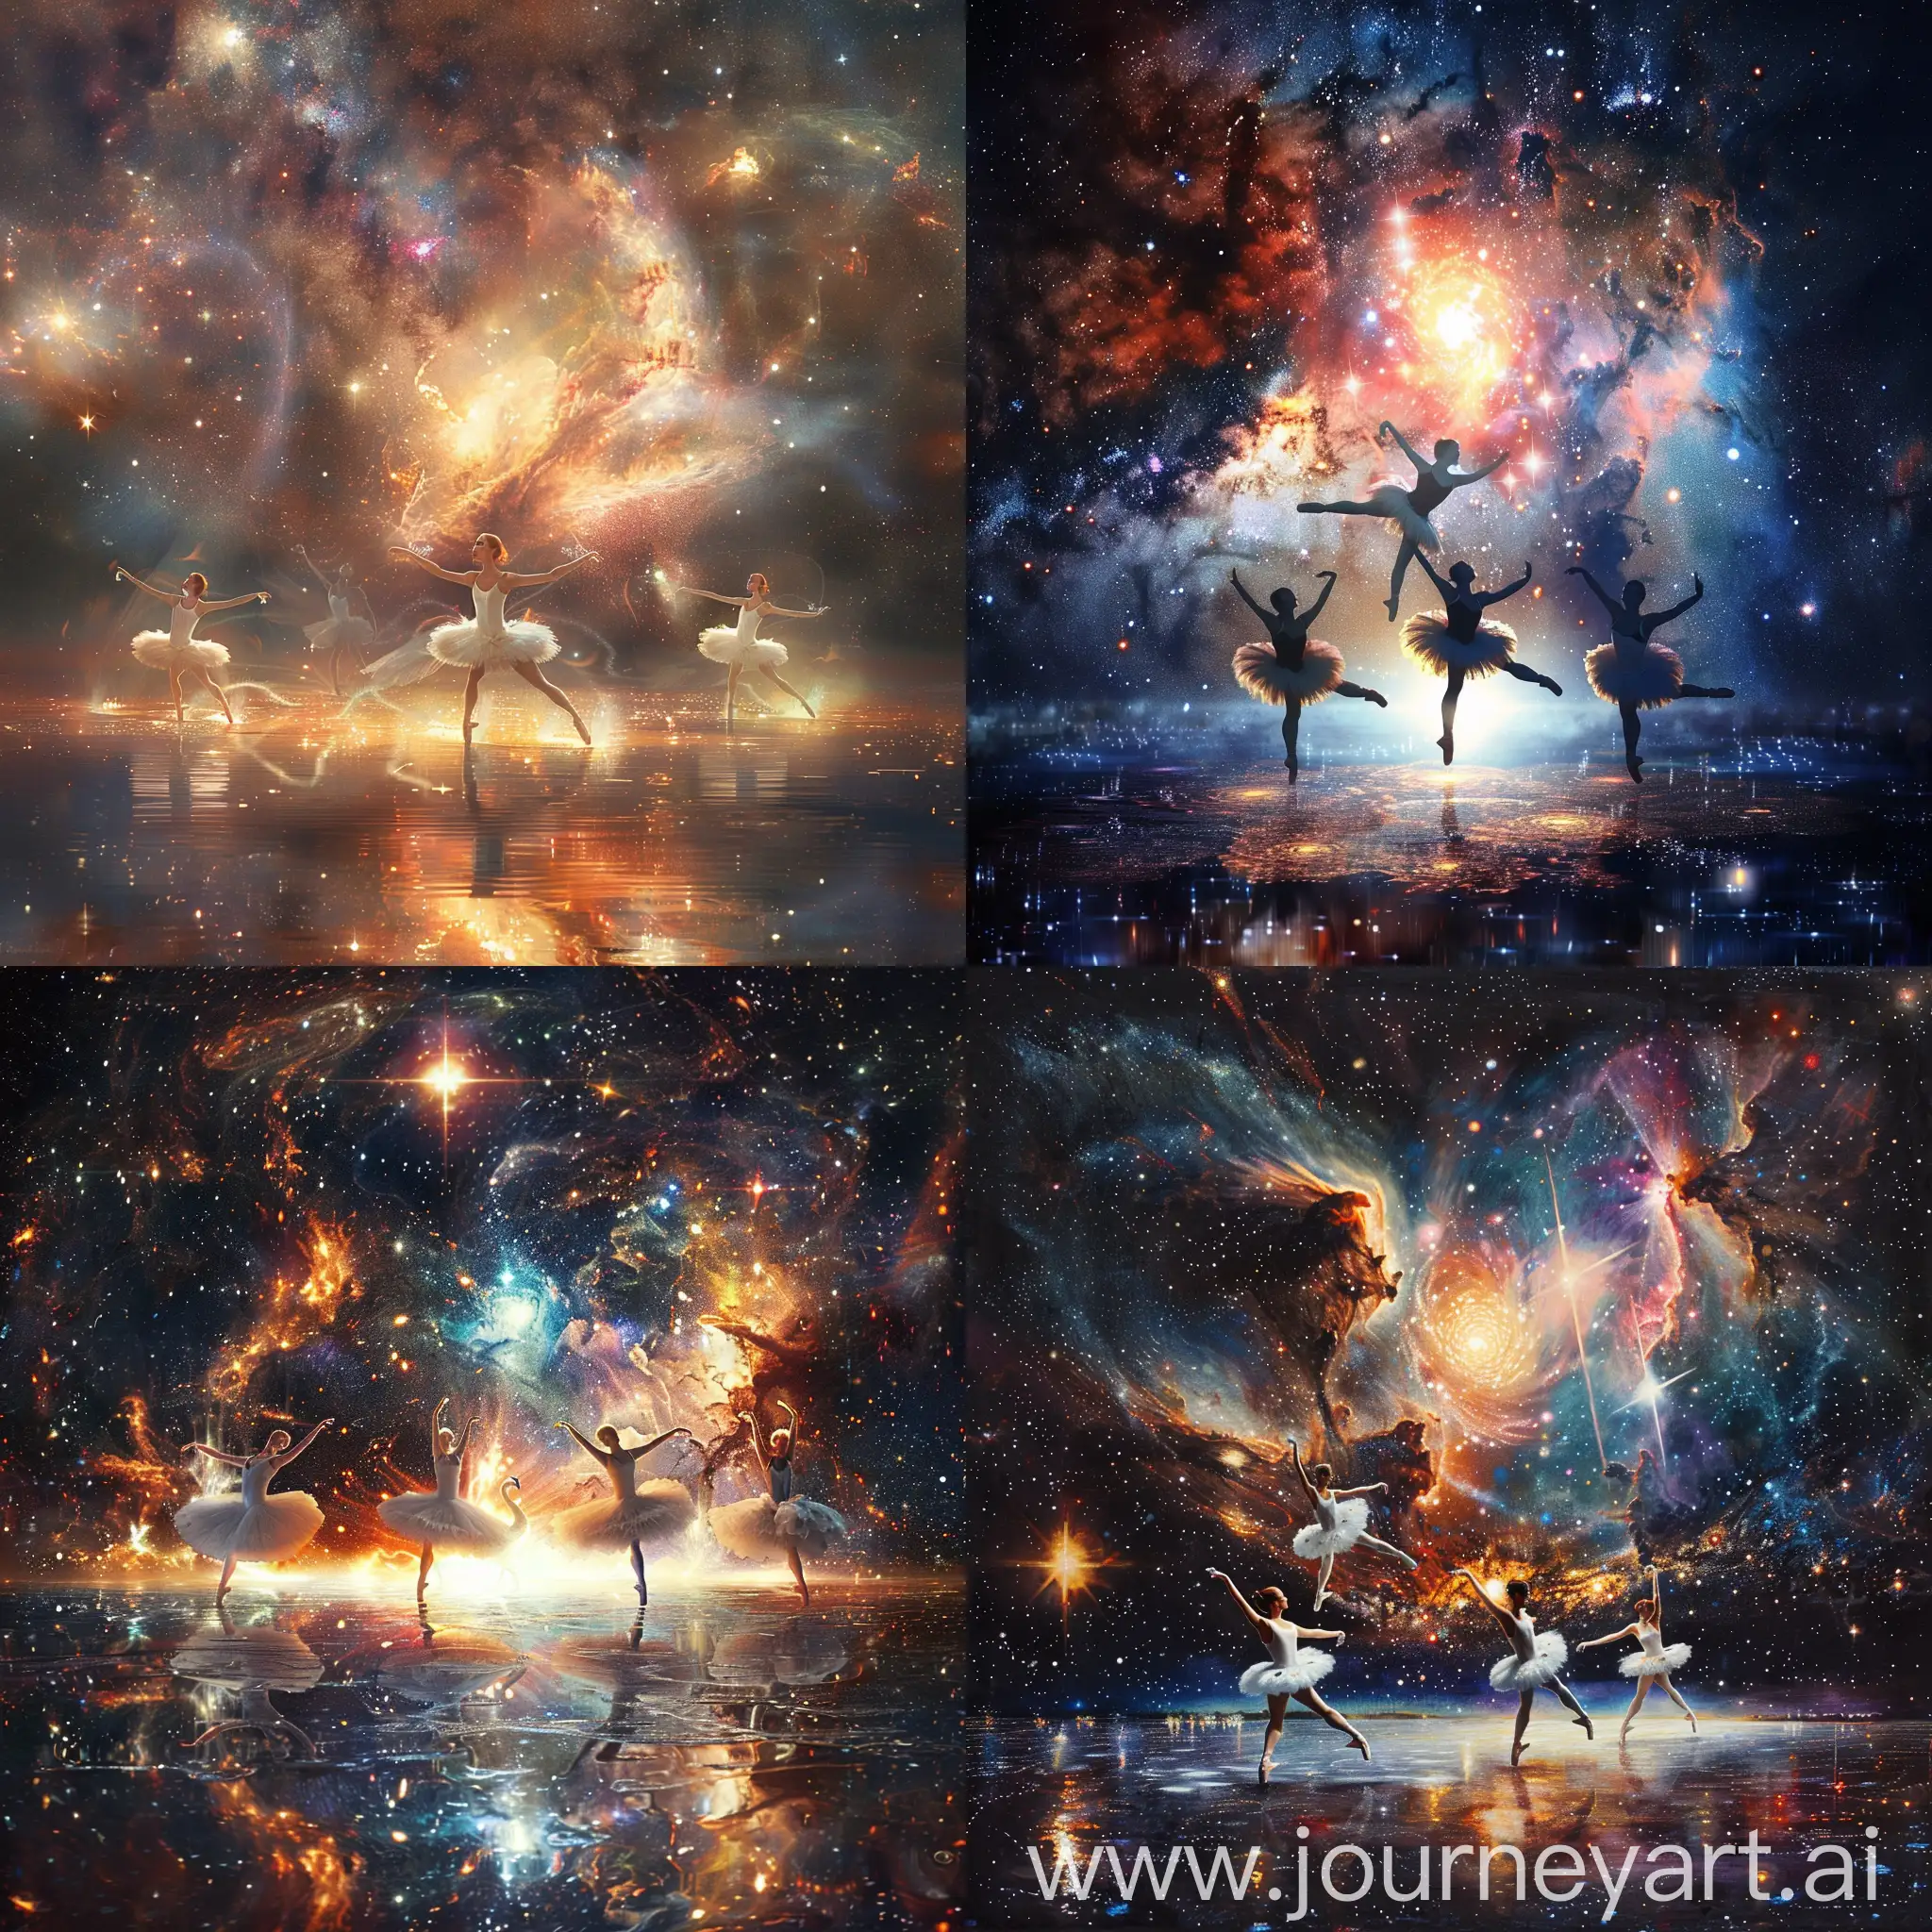 Cosmic-Ballerinas-Performing-Swan-Lake-Amidst-Stars-and-Supernova